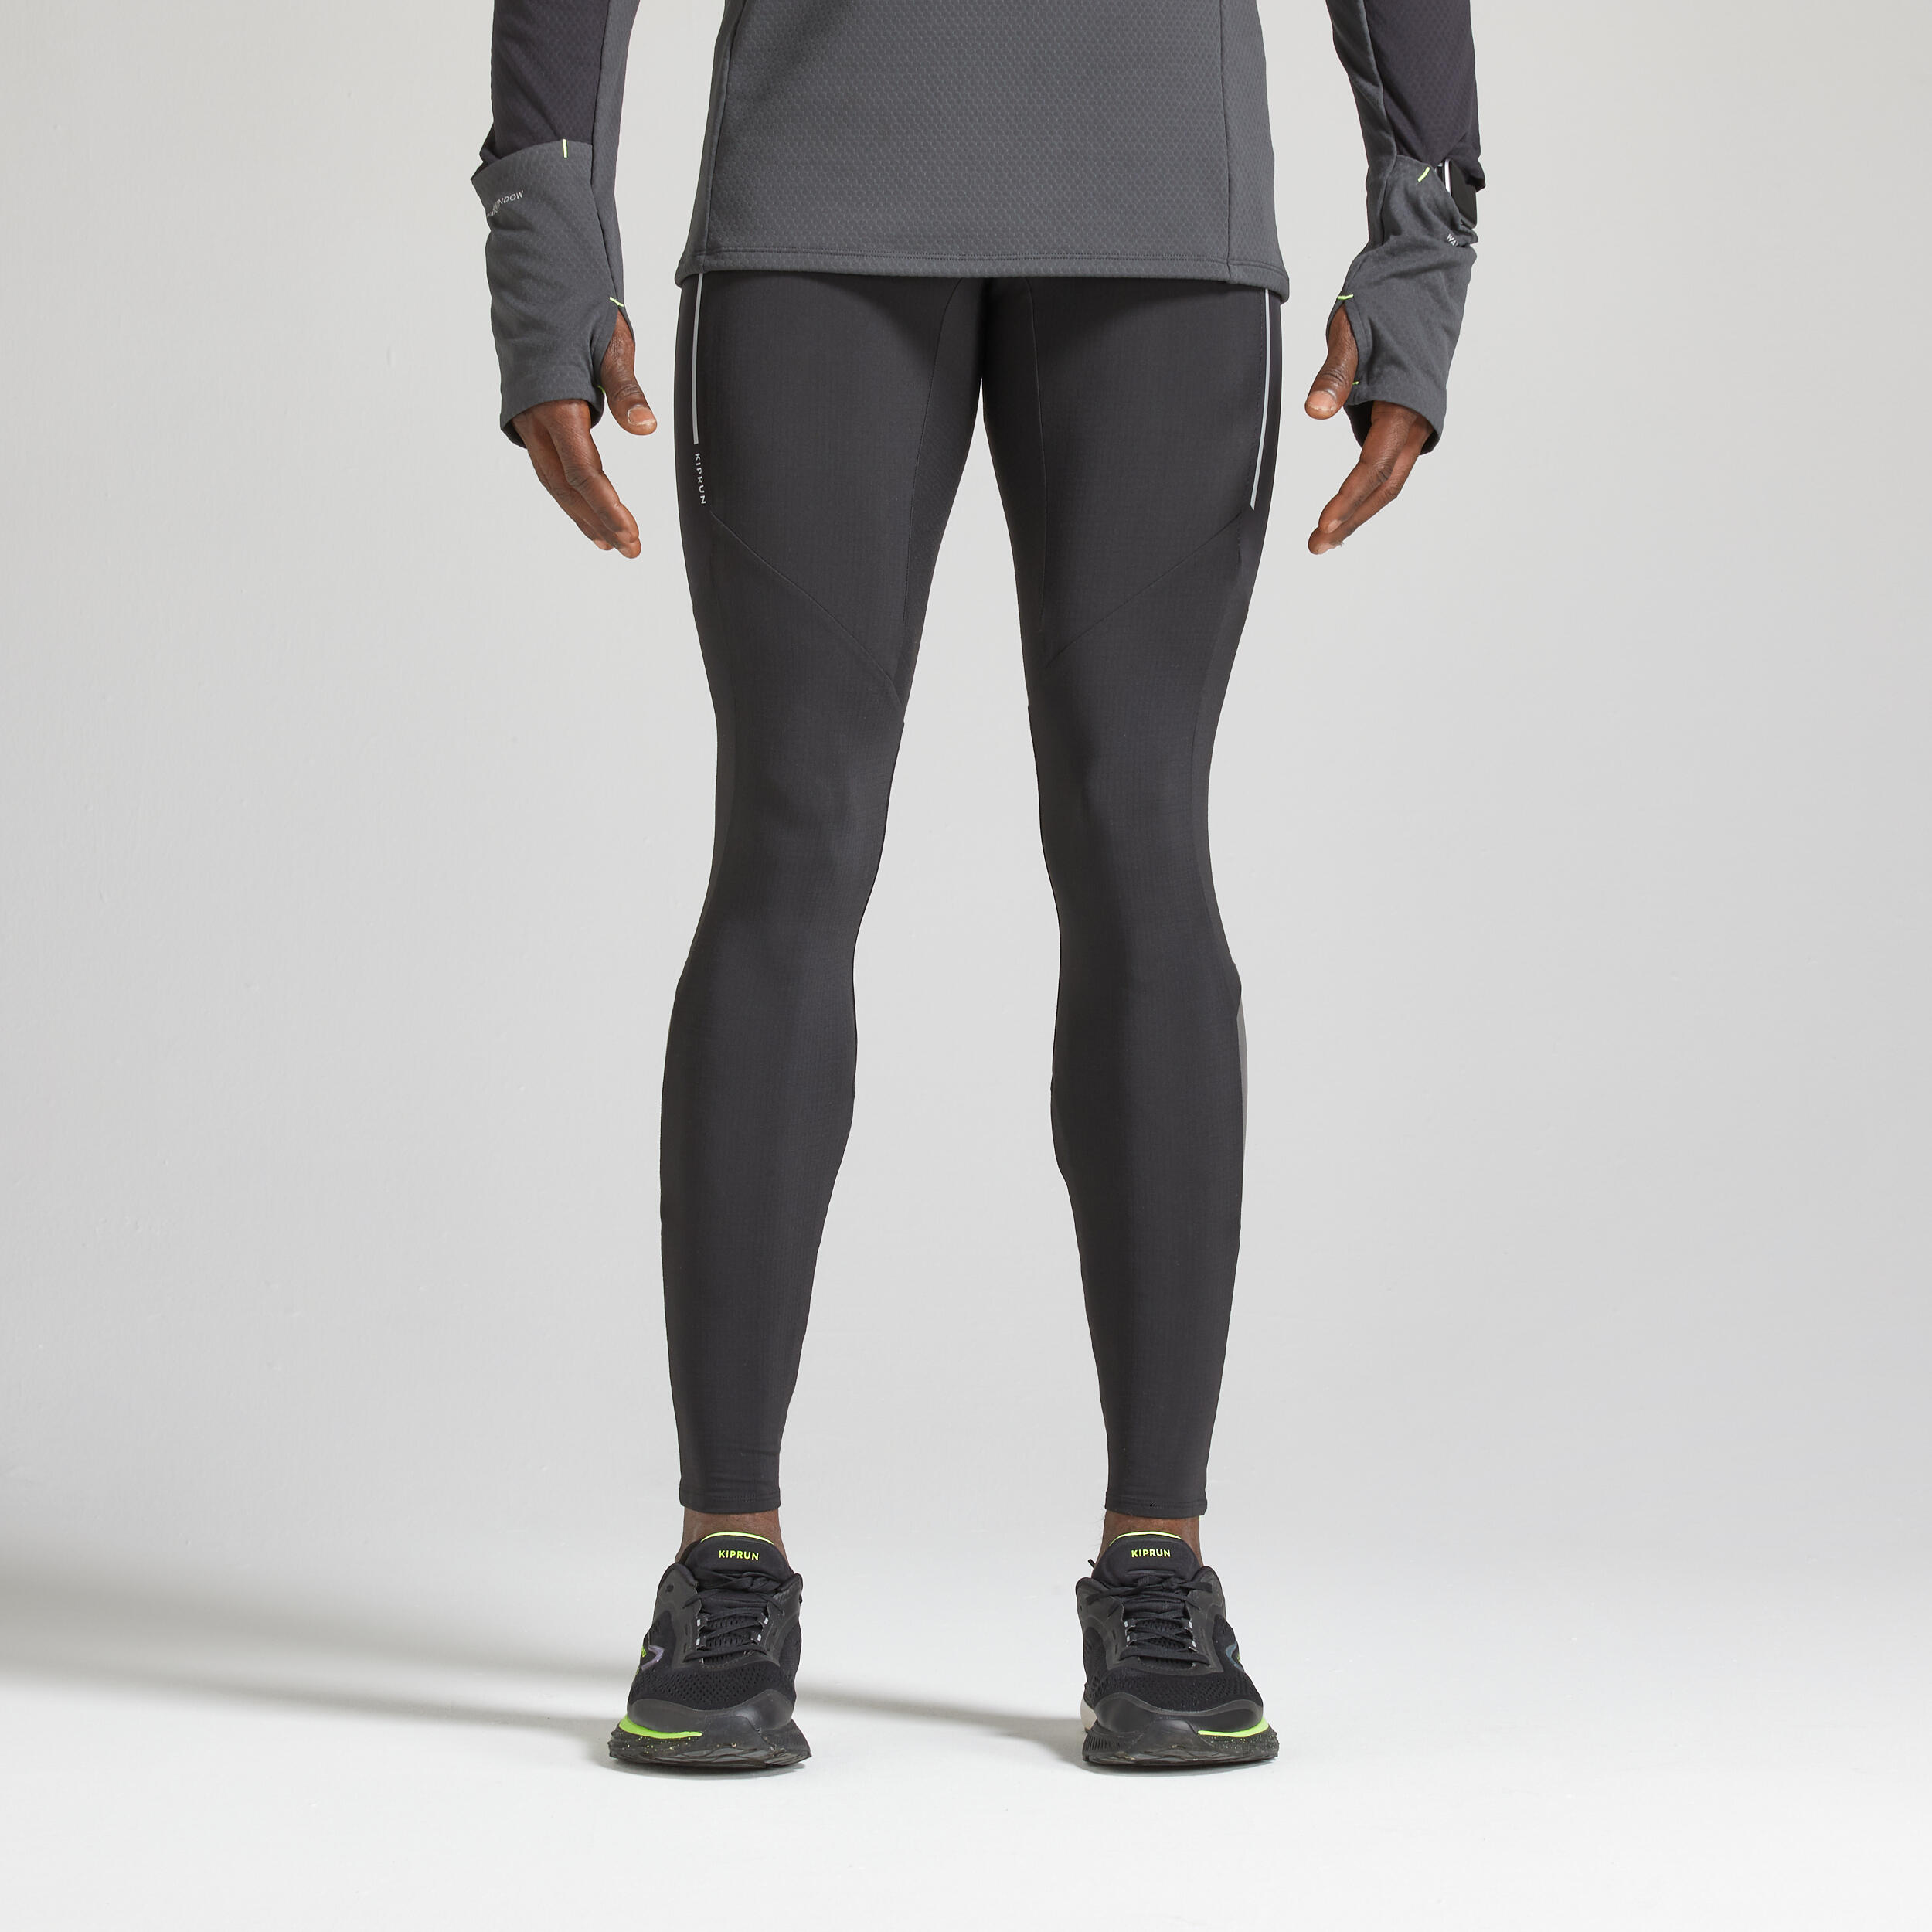 Men's Running Leggings - Warm Black/Grey - Black, Carbon grey